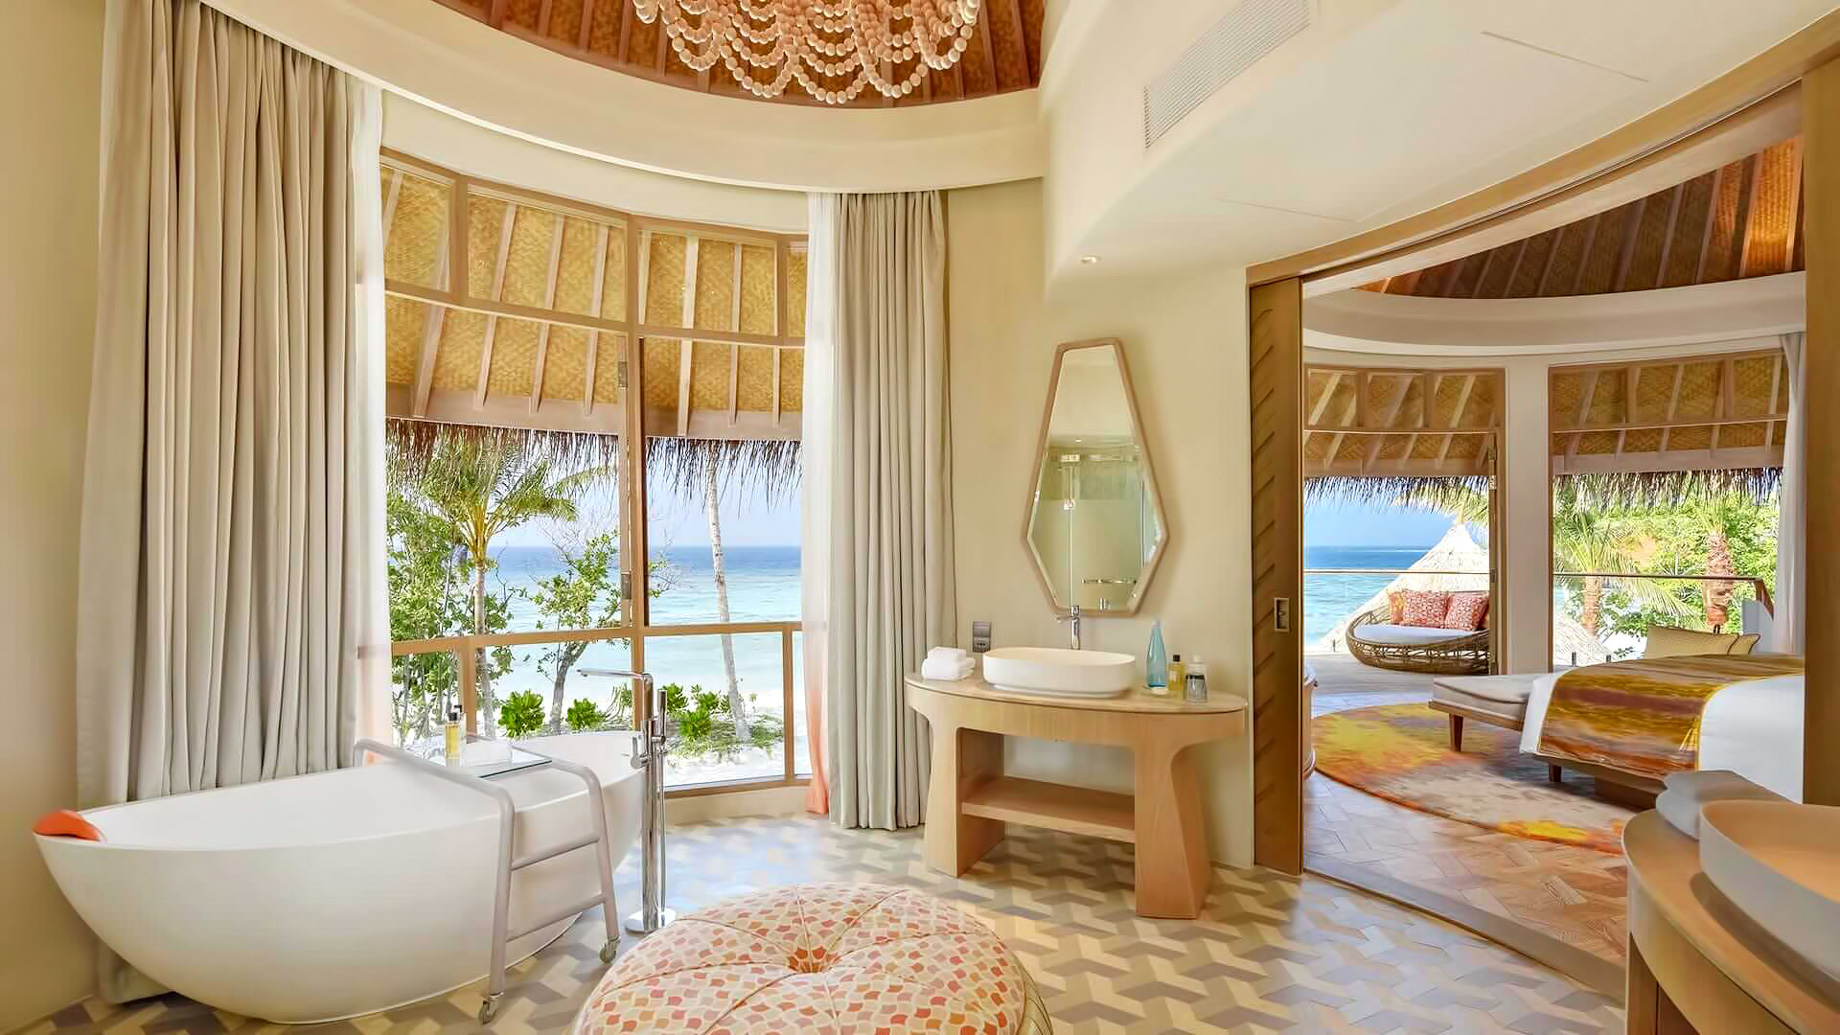 The Nautilus Maldives Resort - Thiladhoo Island, Maldives - Beach Residence Master Bathroom